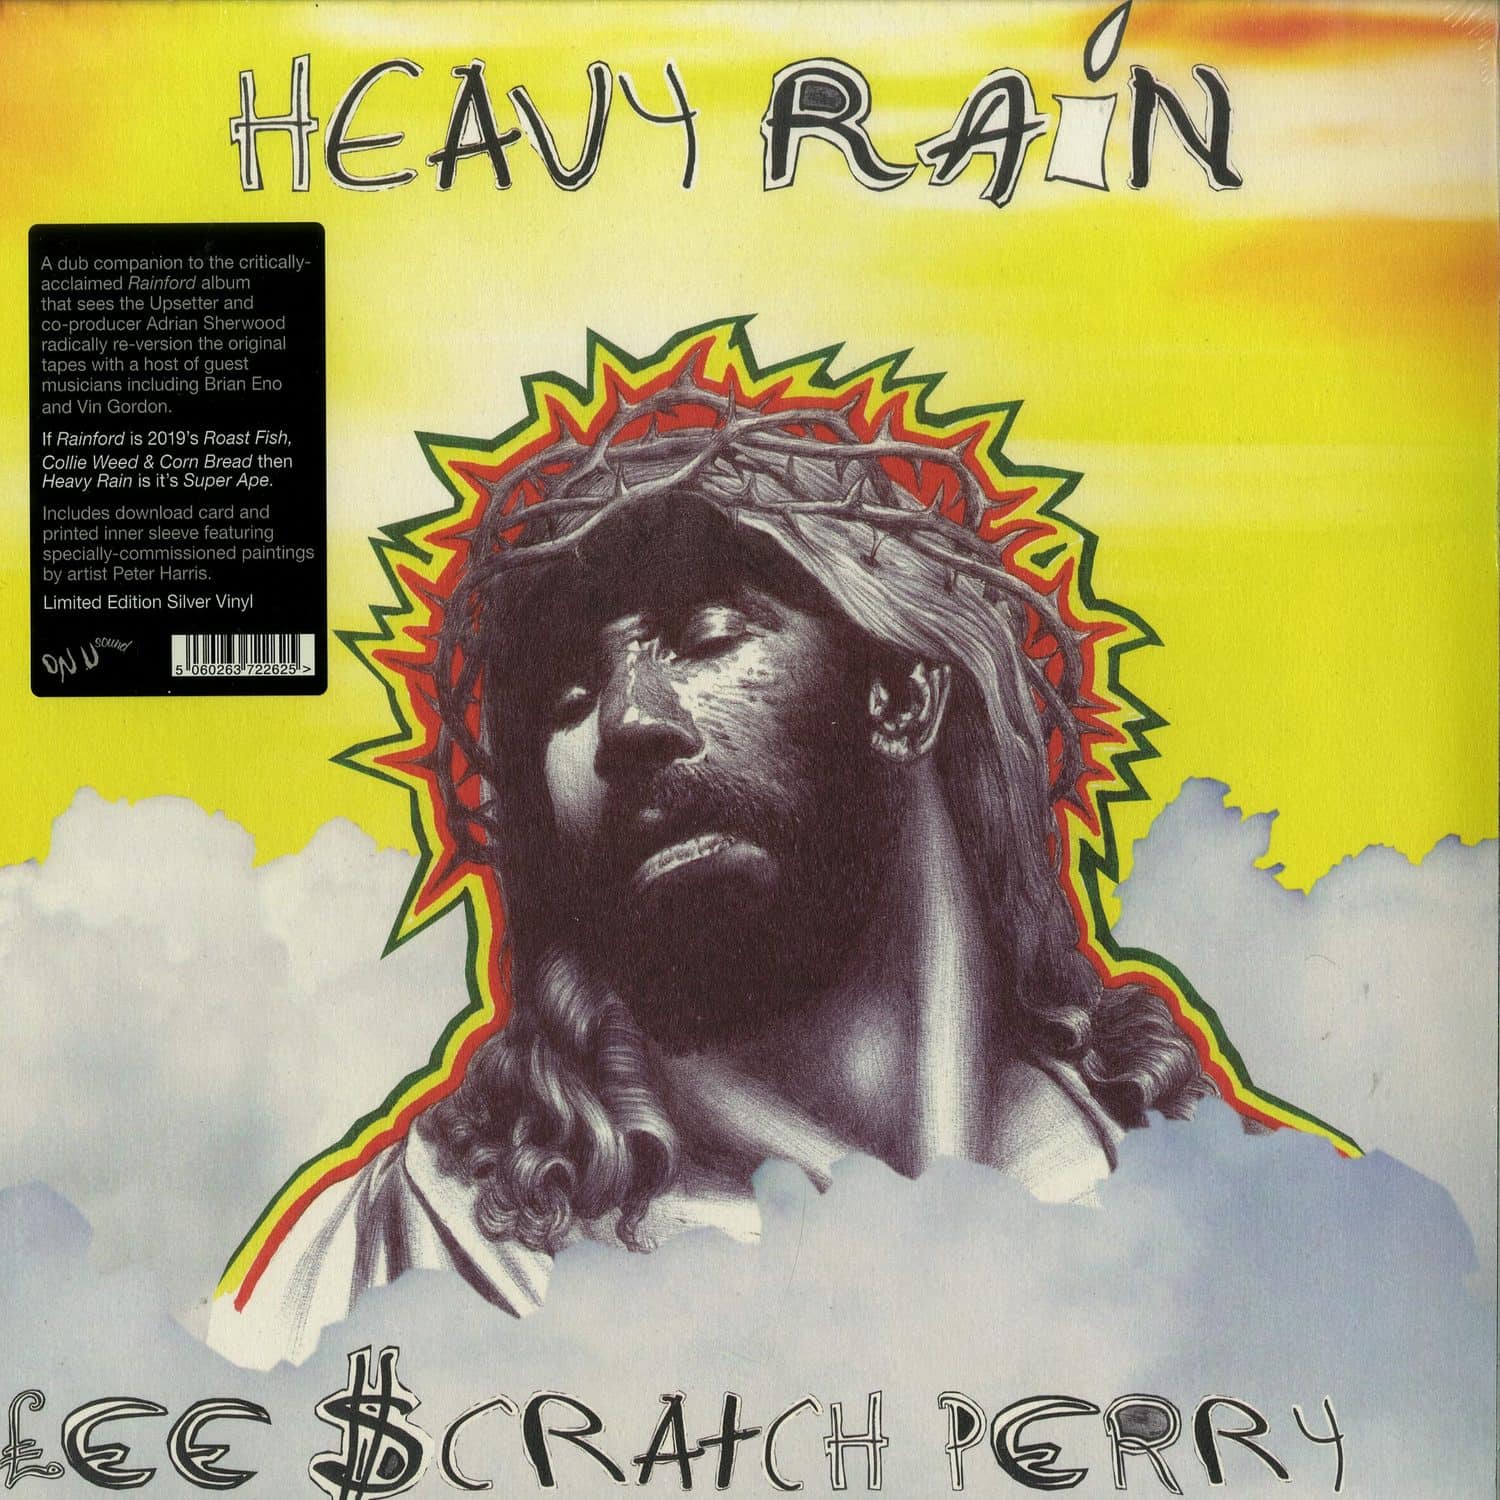 Lee Scratch Perry - HEAVY RAIN 